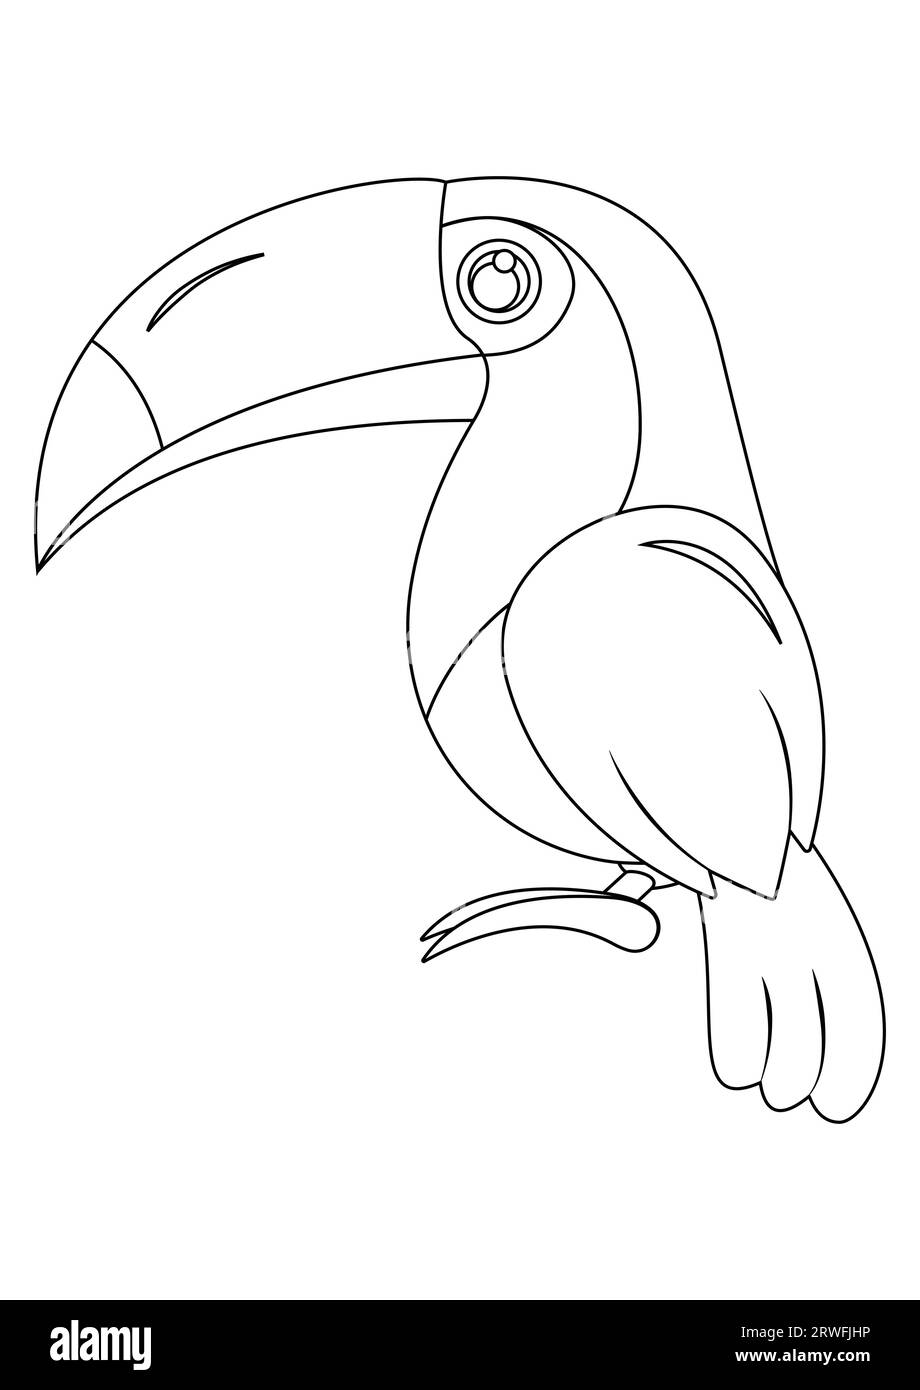 Black and White Toucan Bird Vector Illustration. Coloring Page of Toucan Bird Stock Vector